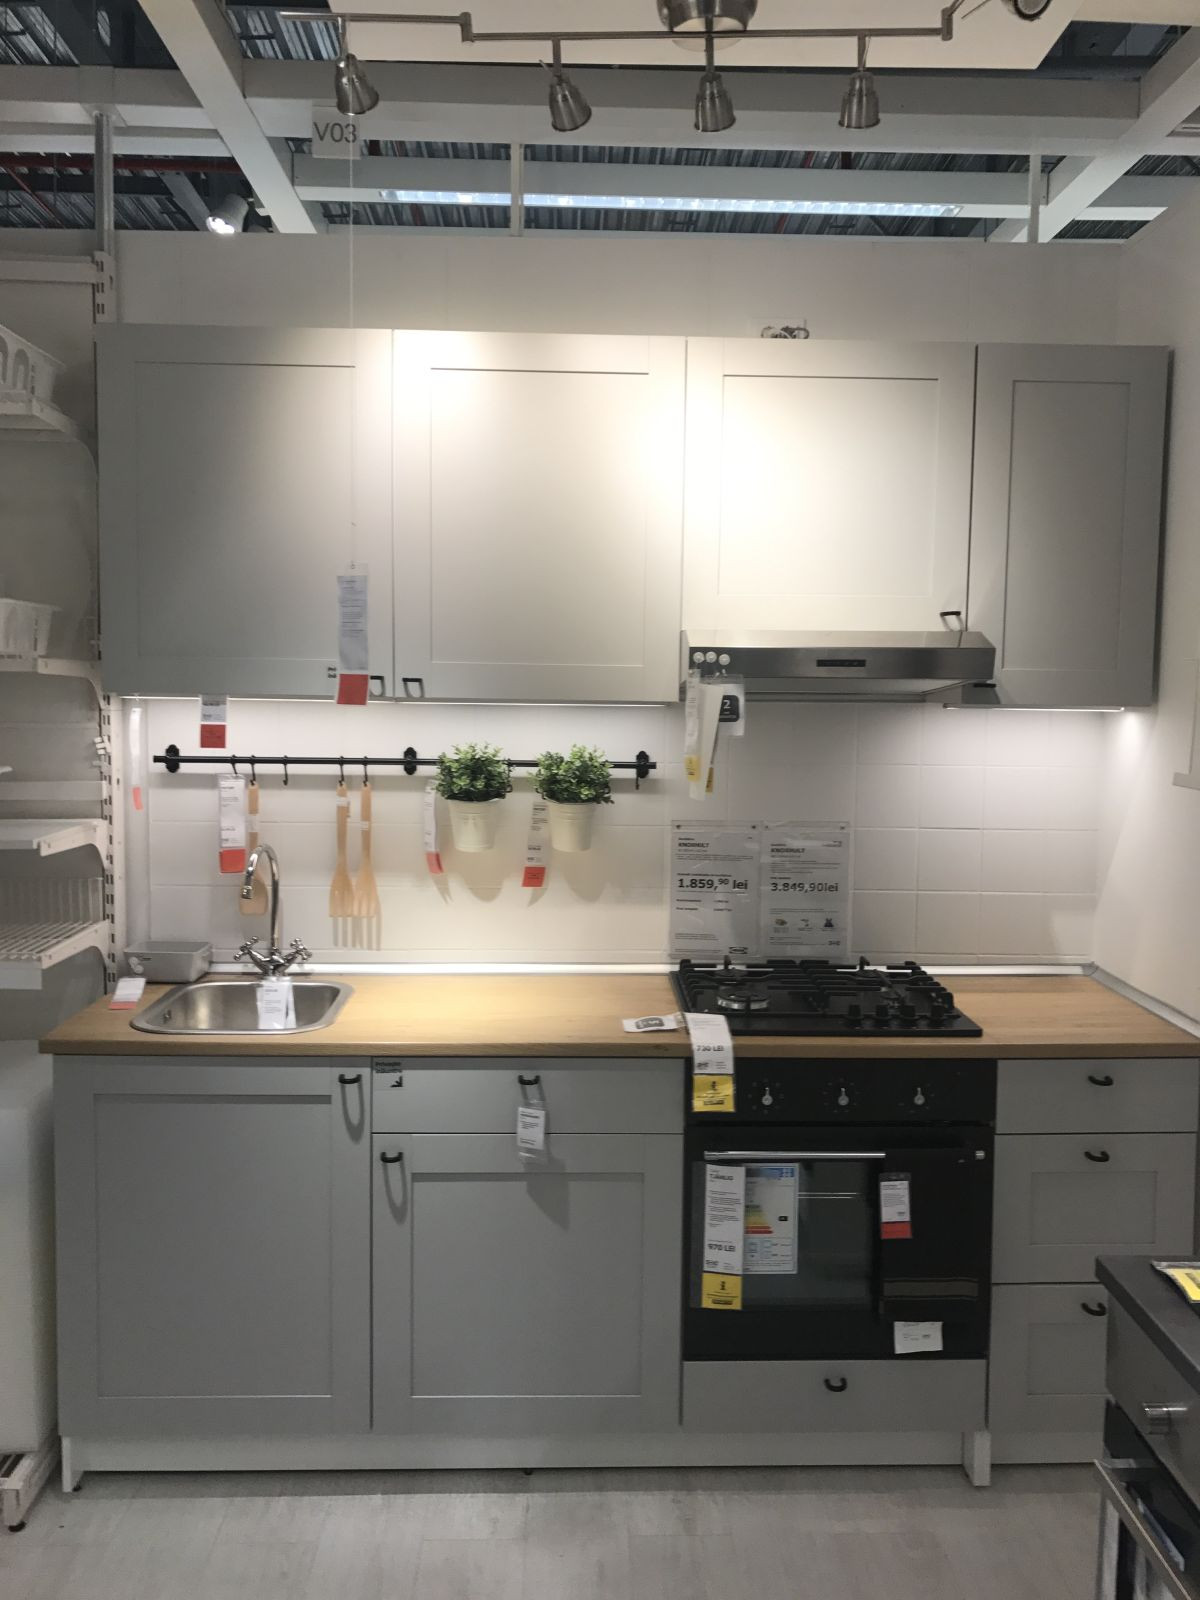 Ikea Small Kitchen Ideas
 Create a Stylish Space Starting With an IKEA Kitchen Design